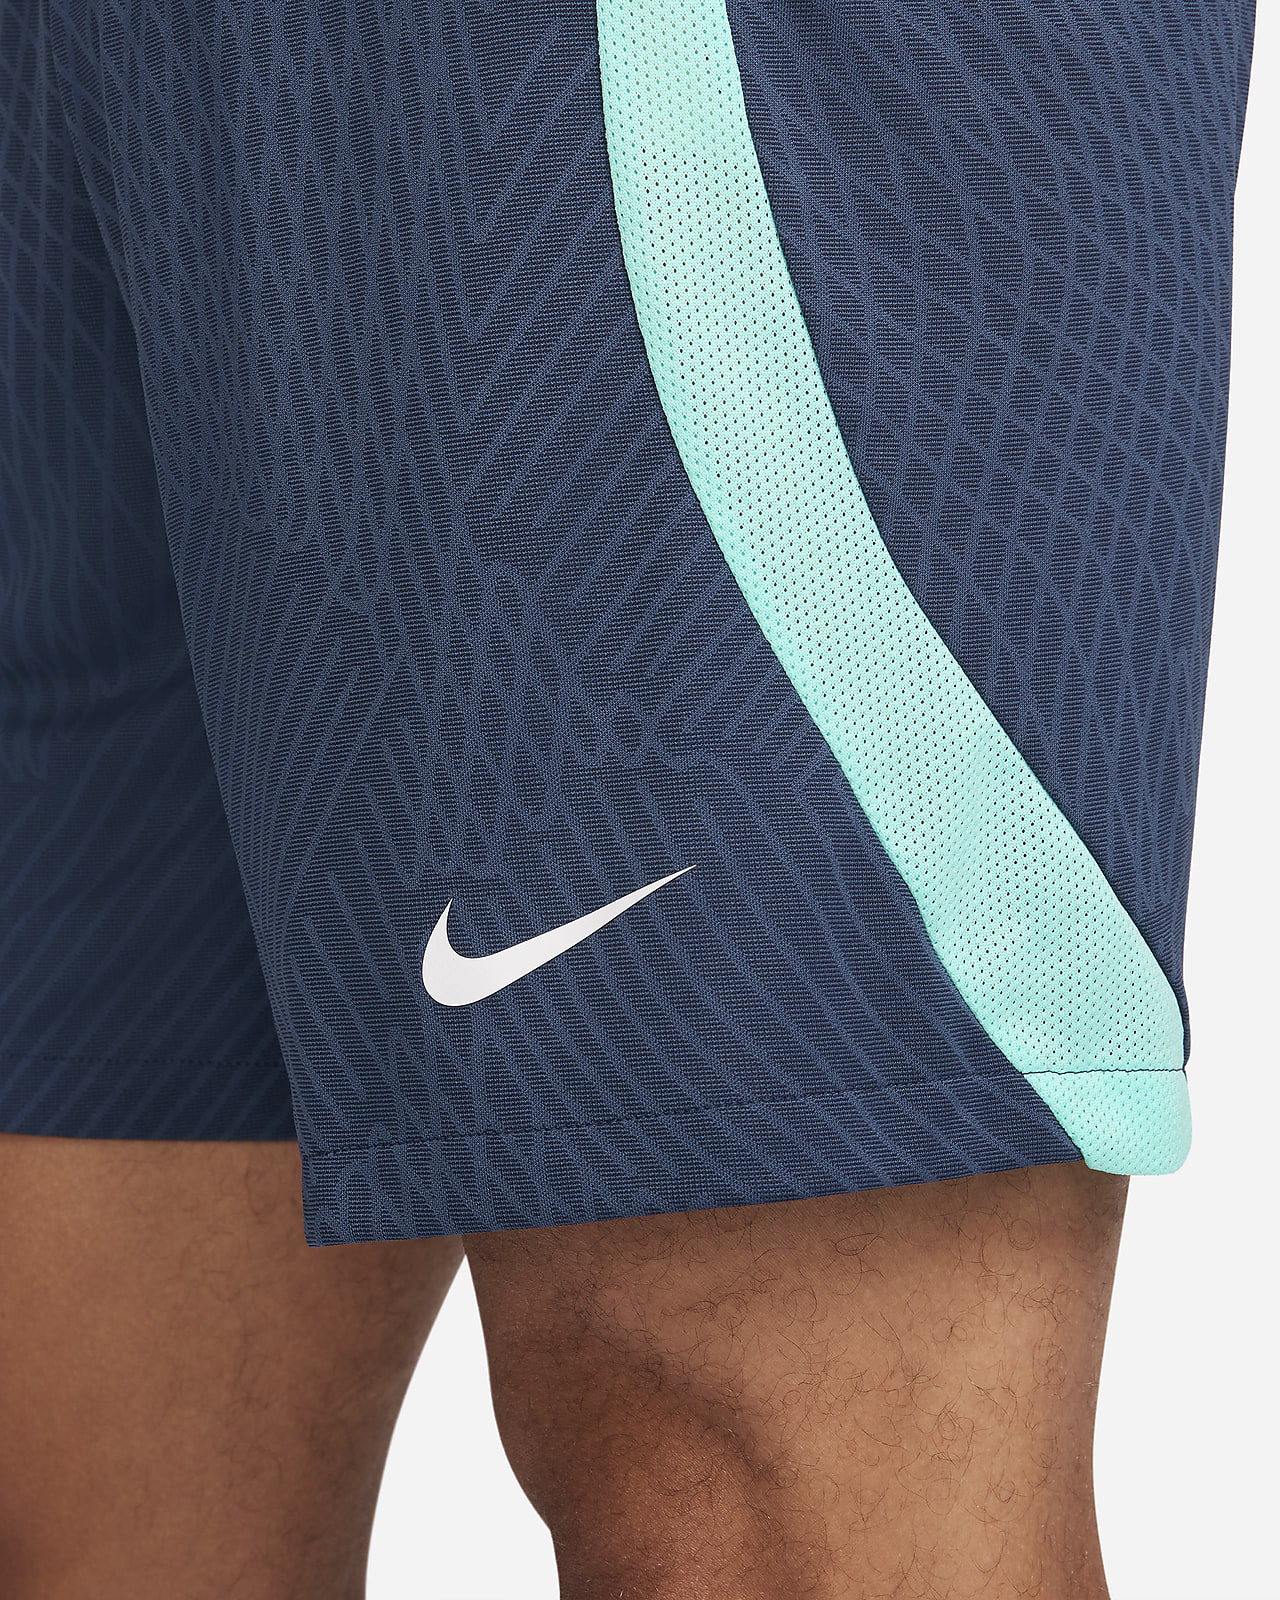 Nike Dri-FIT Strike Men's Soccer Shorts